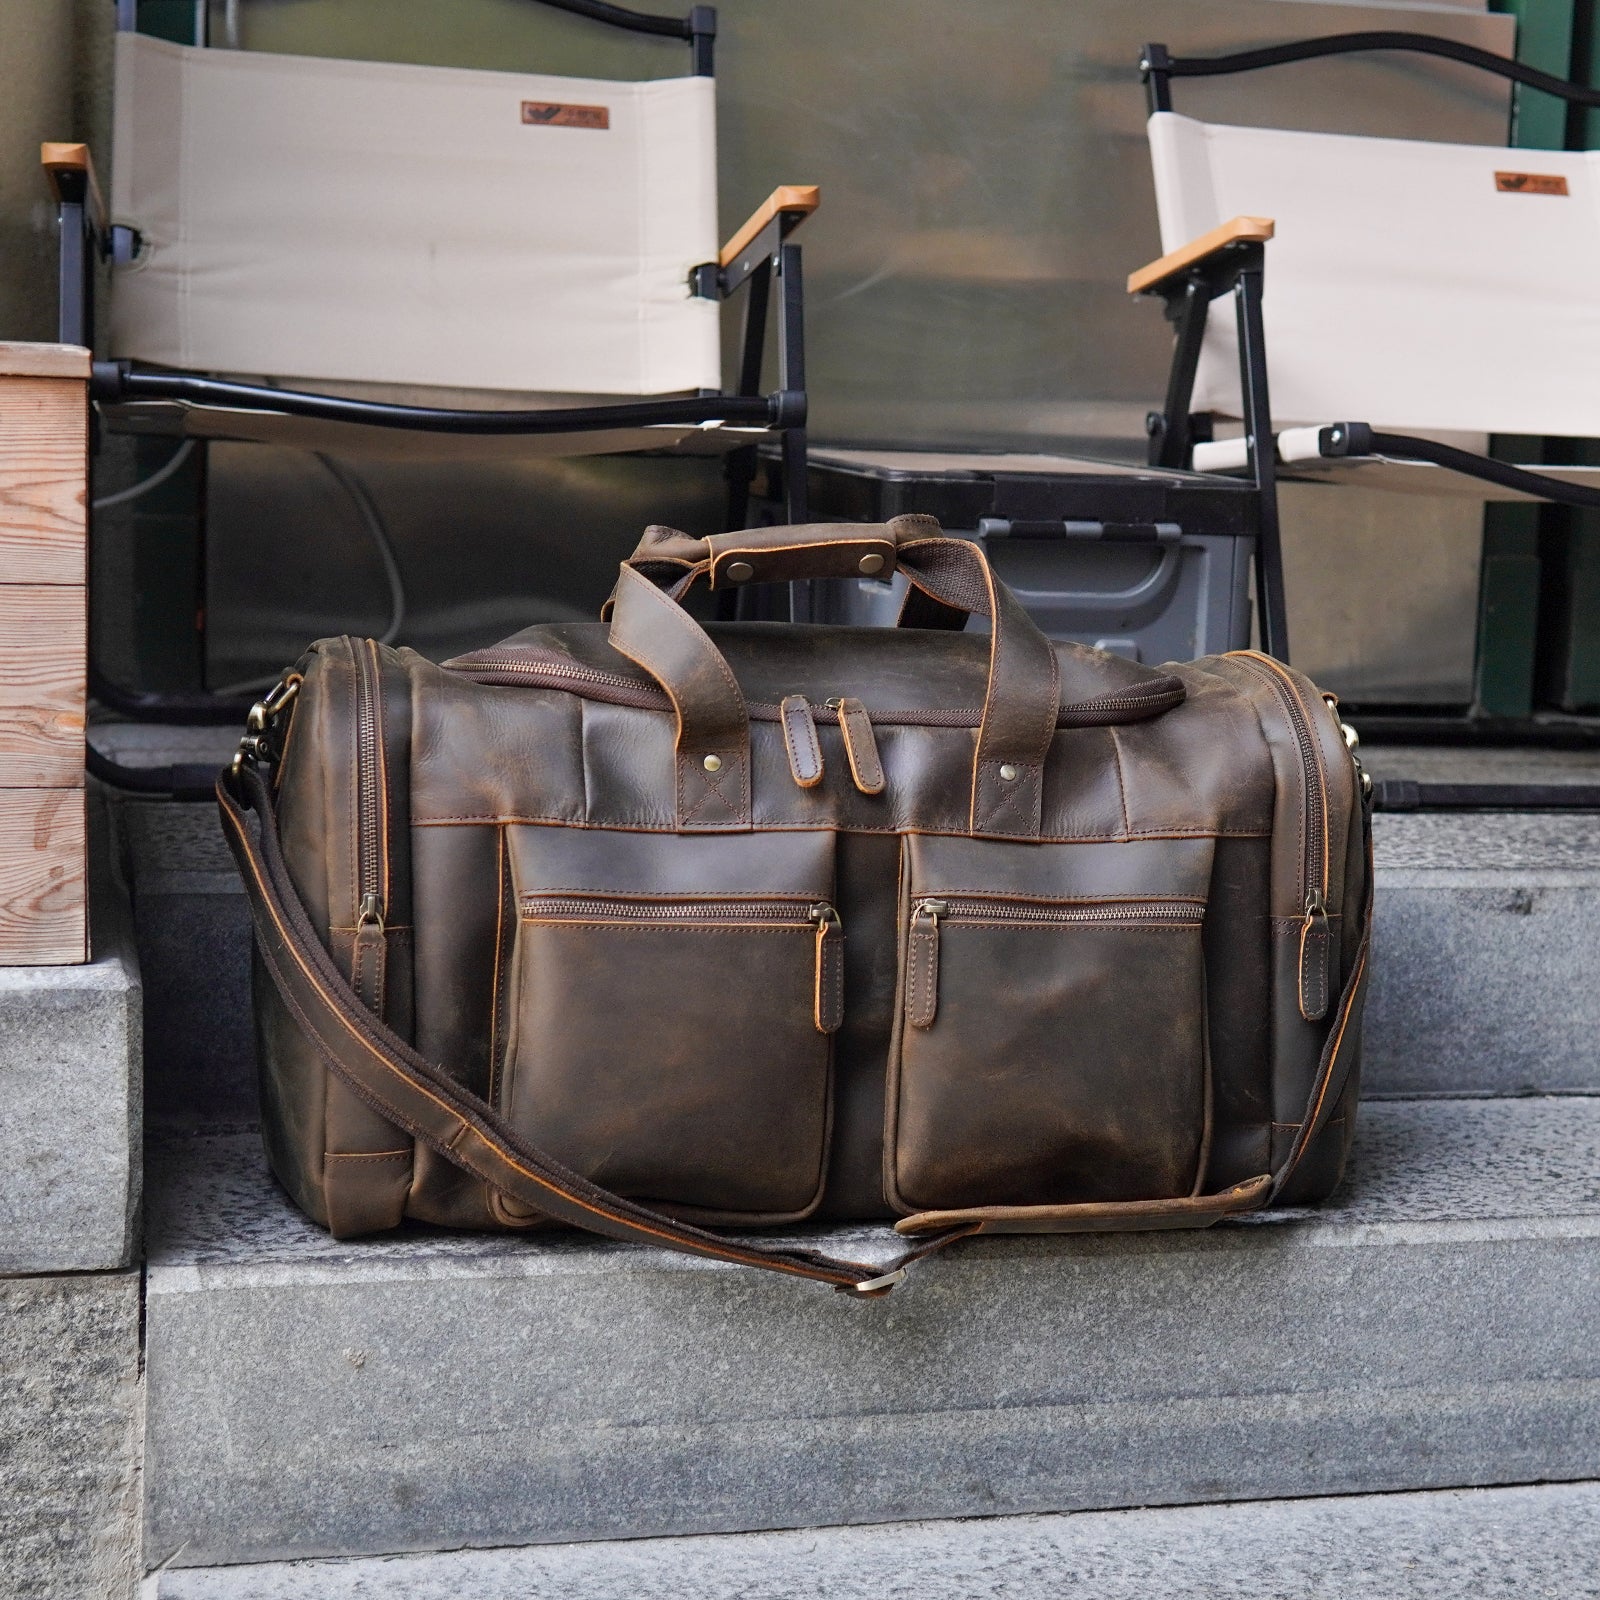 VG001 65cm Tosca Vegan Leather Overnight Travel Bag – The New